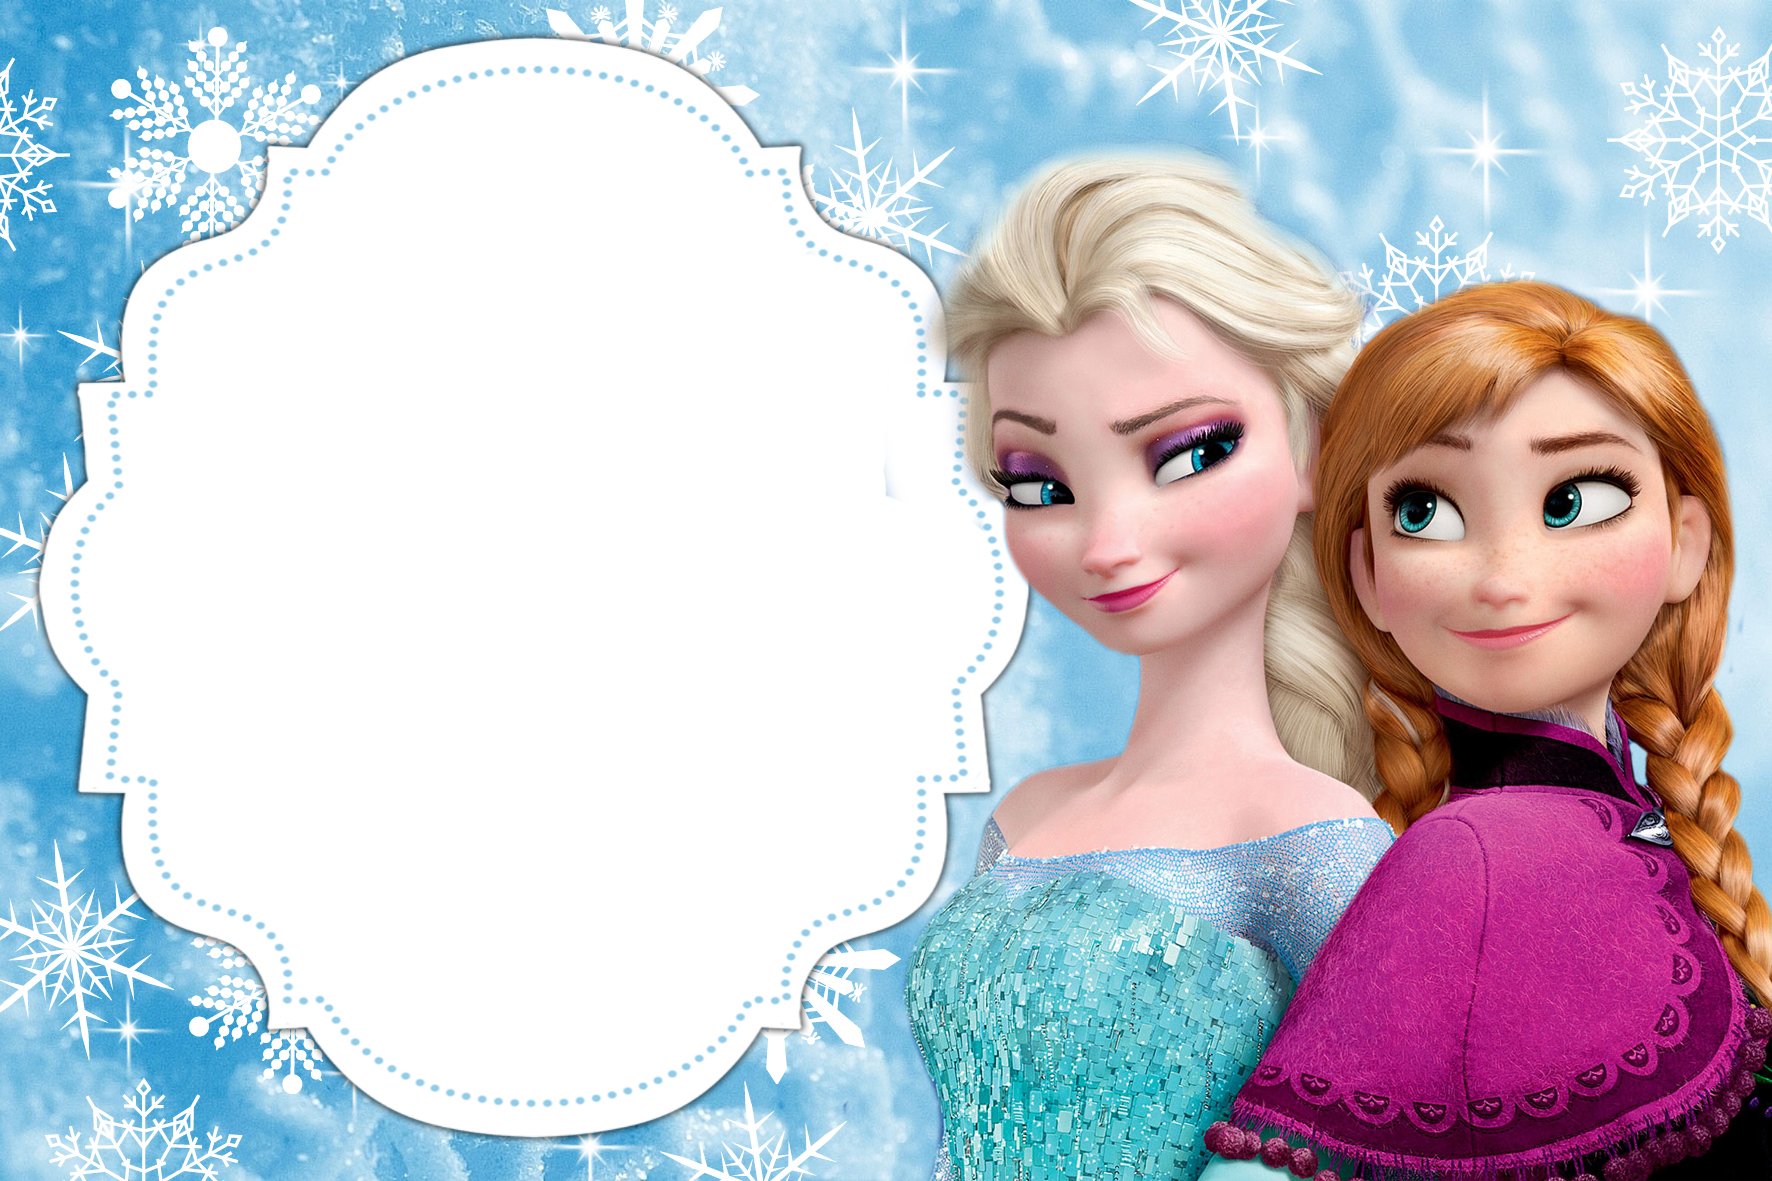 frozen, Animation, Adventure, Comedy, Family, Musical, Fantasy, Disney, 1frozen Wallpaper